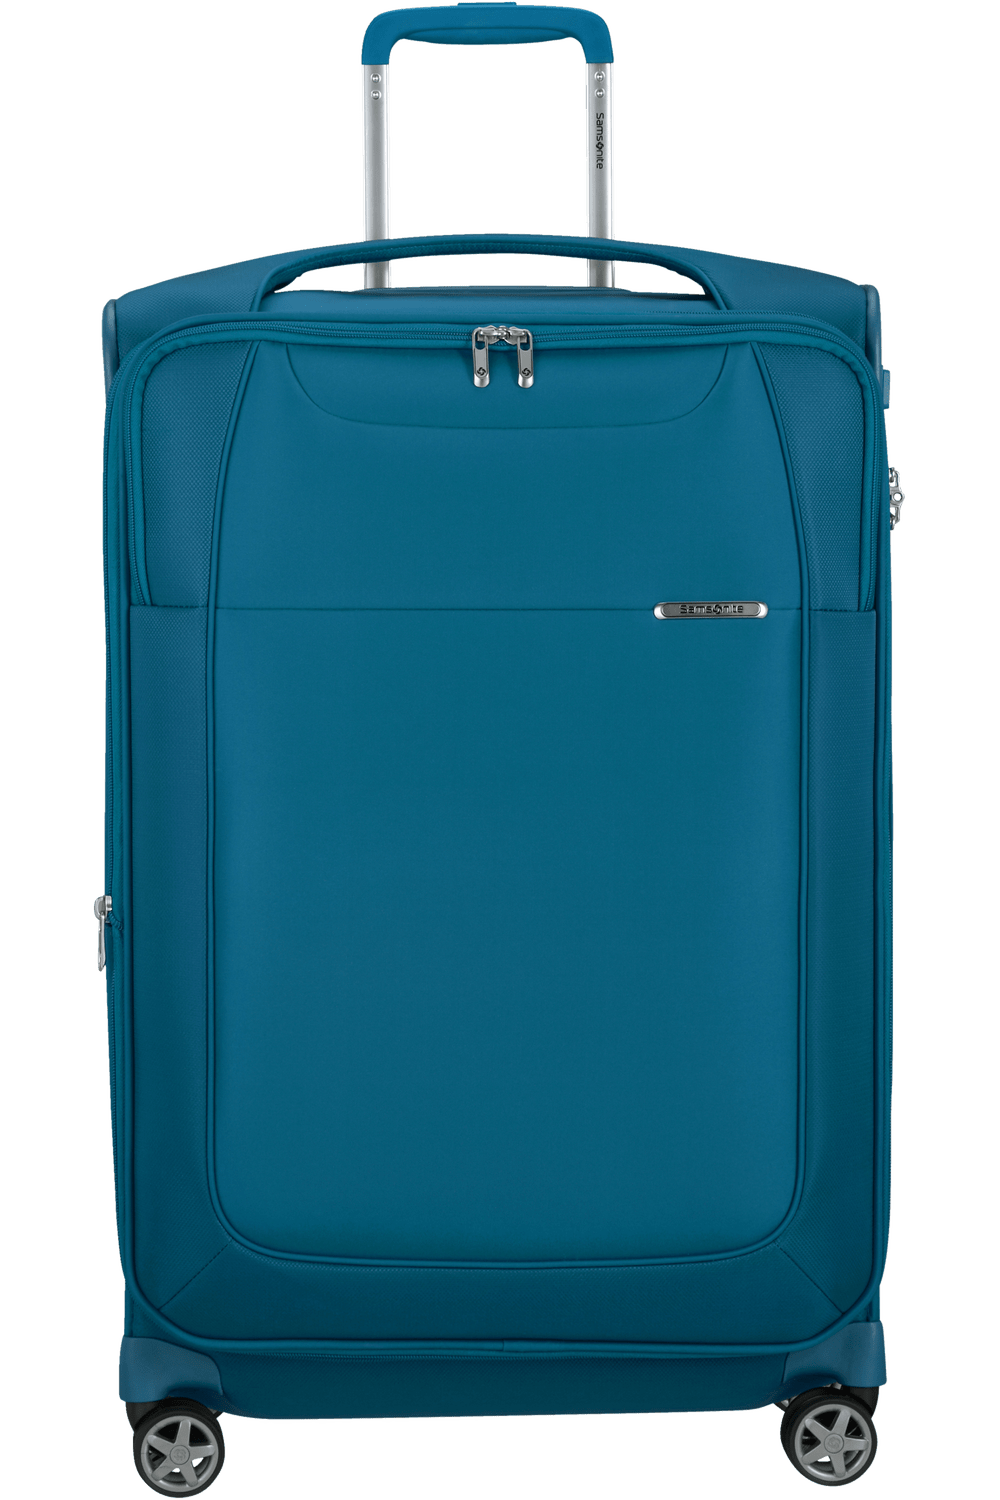 Samsonite D'Lite Spinner Medium Luggage - Limited Edition: Petrol Blue